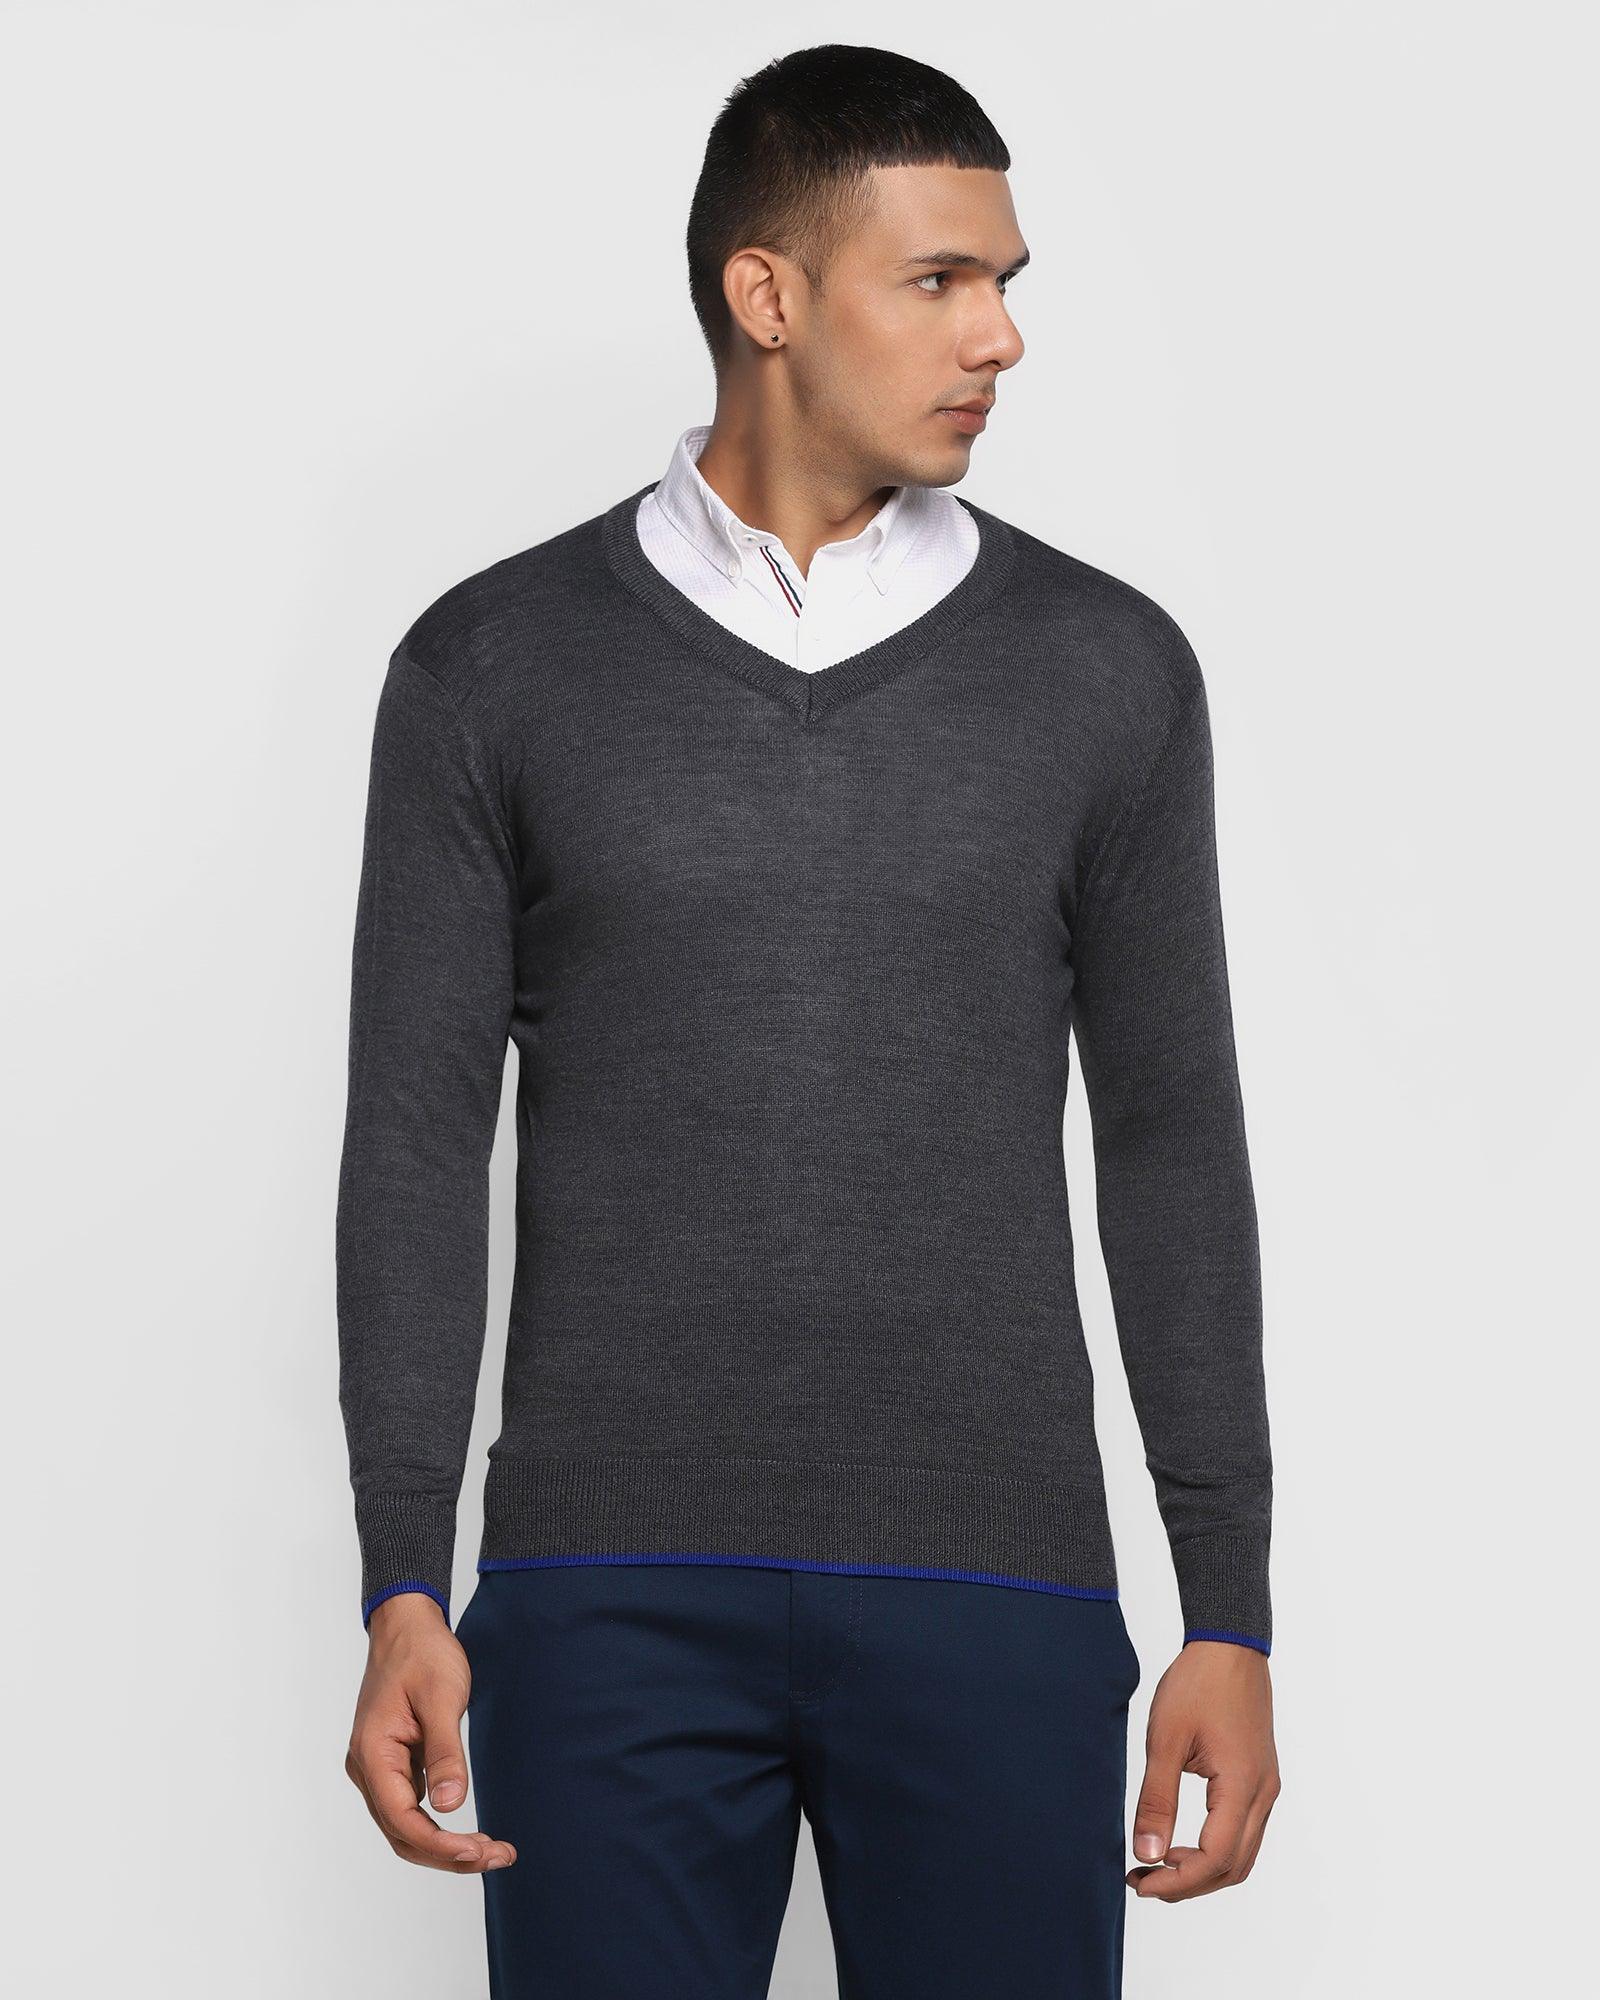 V-Neck Charcoal Solid Sweater - Savior